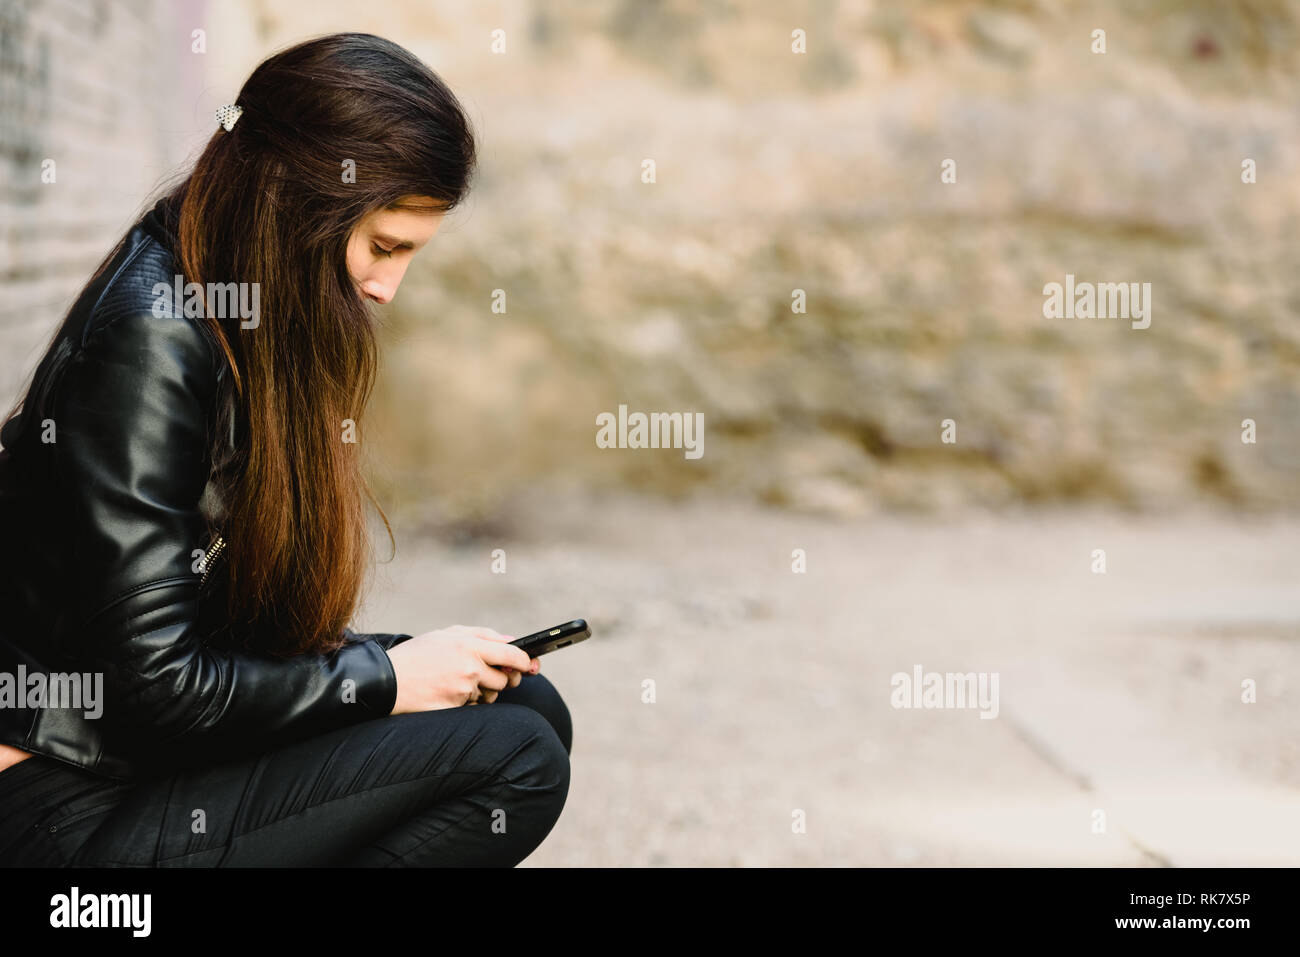 Sad teenage girl feeling lonely, looking at smartphone reading